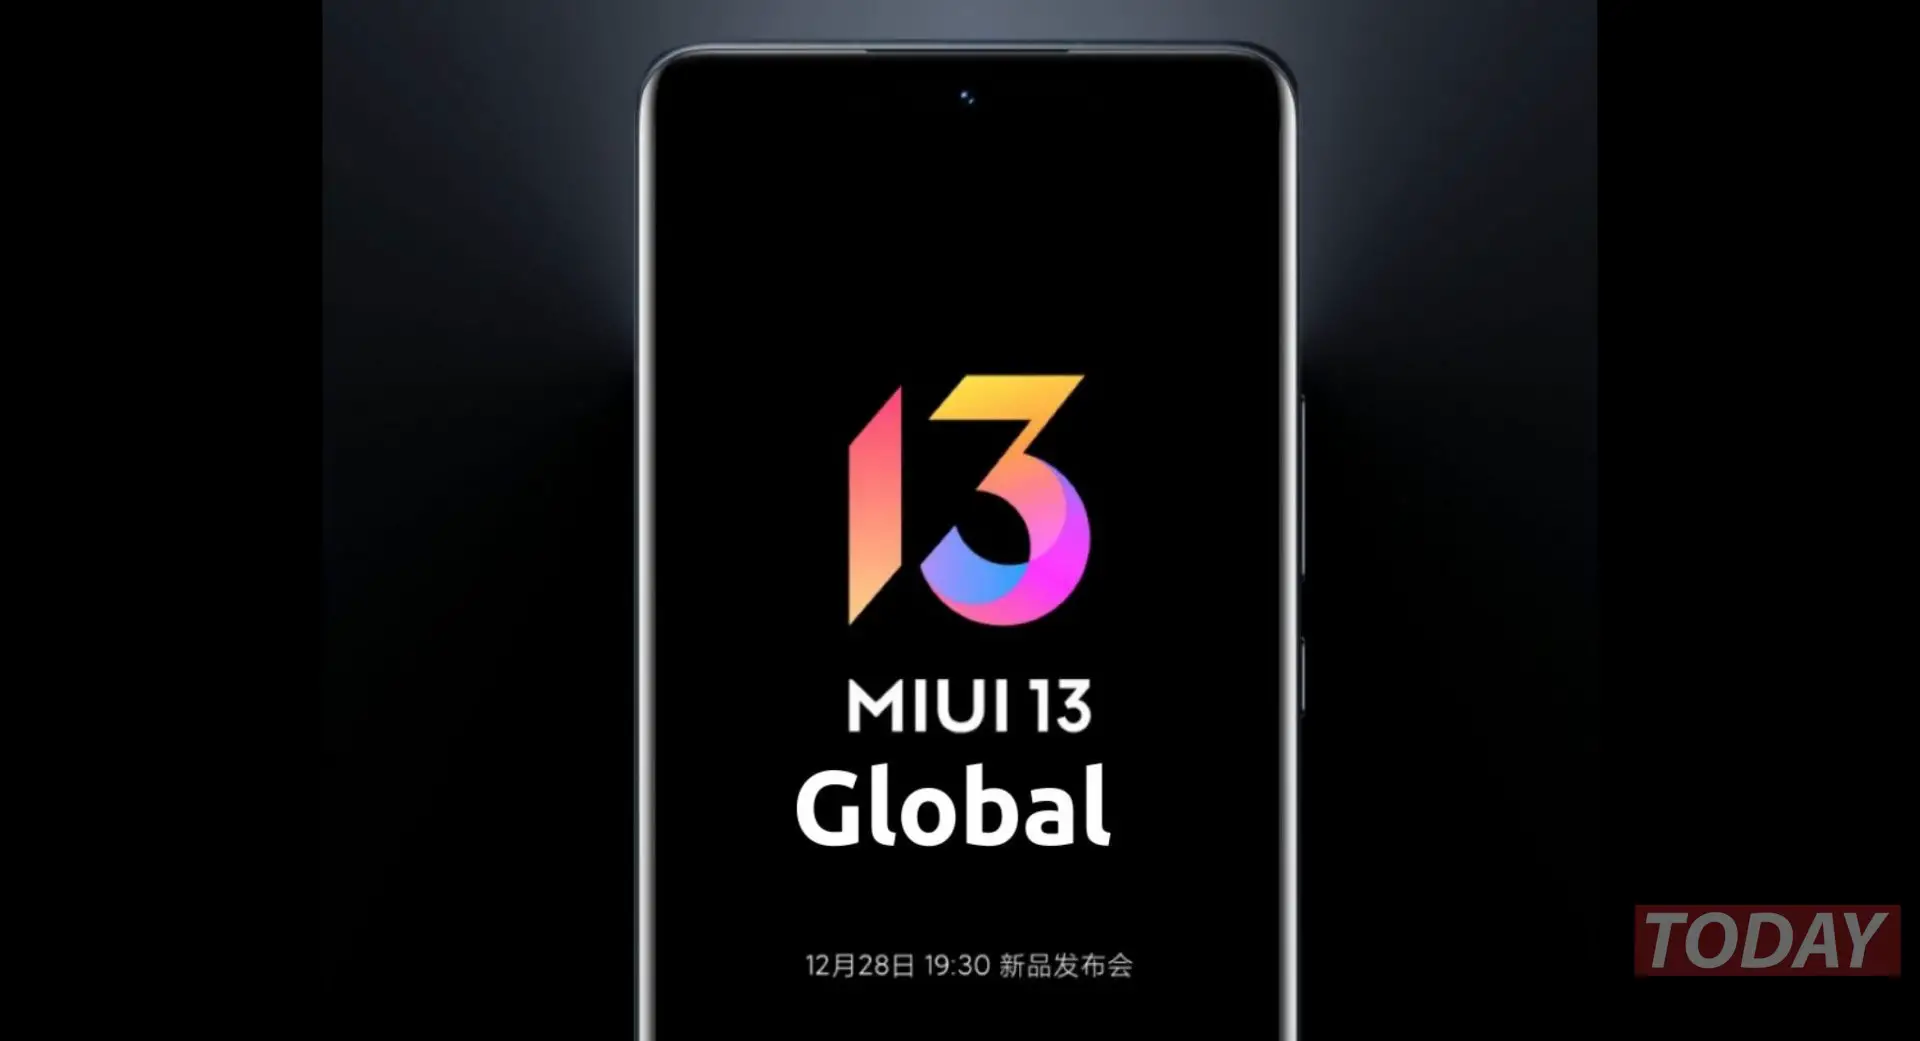 miui 13 העולמי הרשמי: חדשות ורשימת מכשירים שיעודכנו